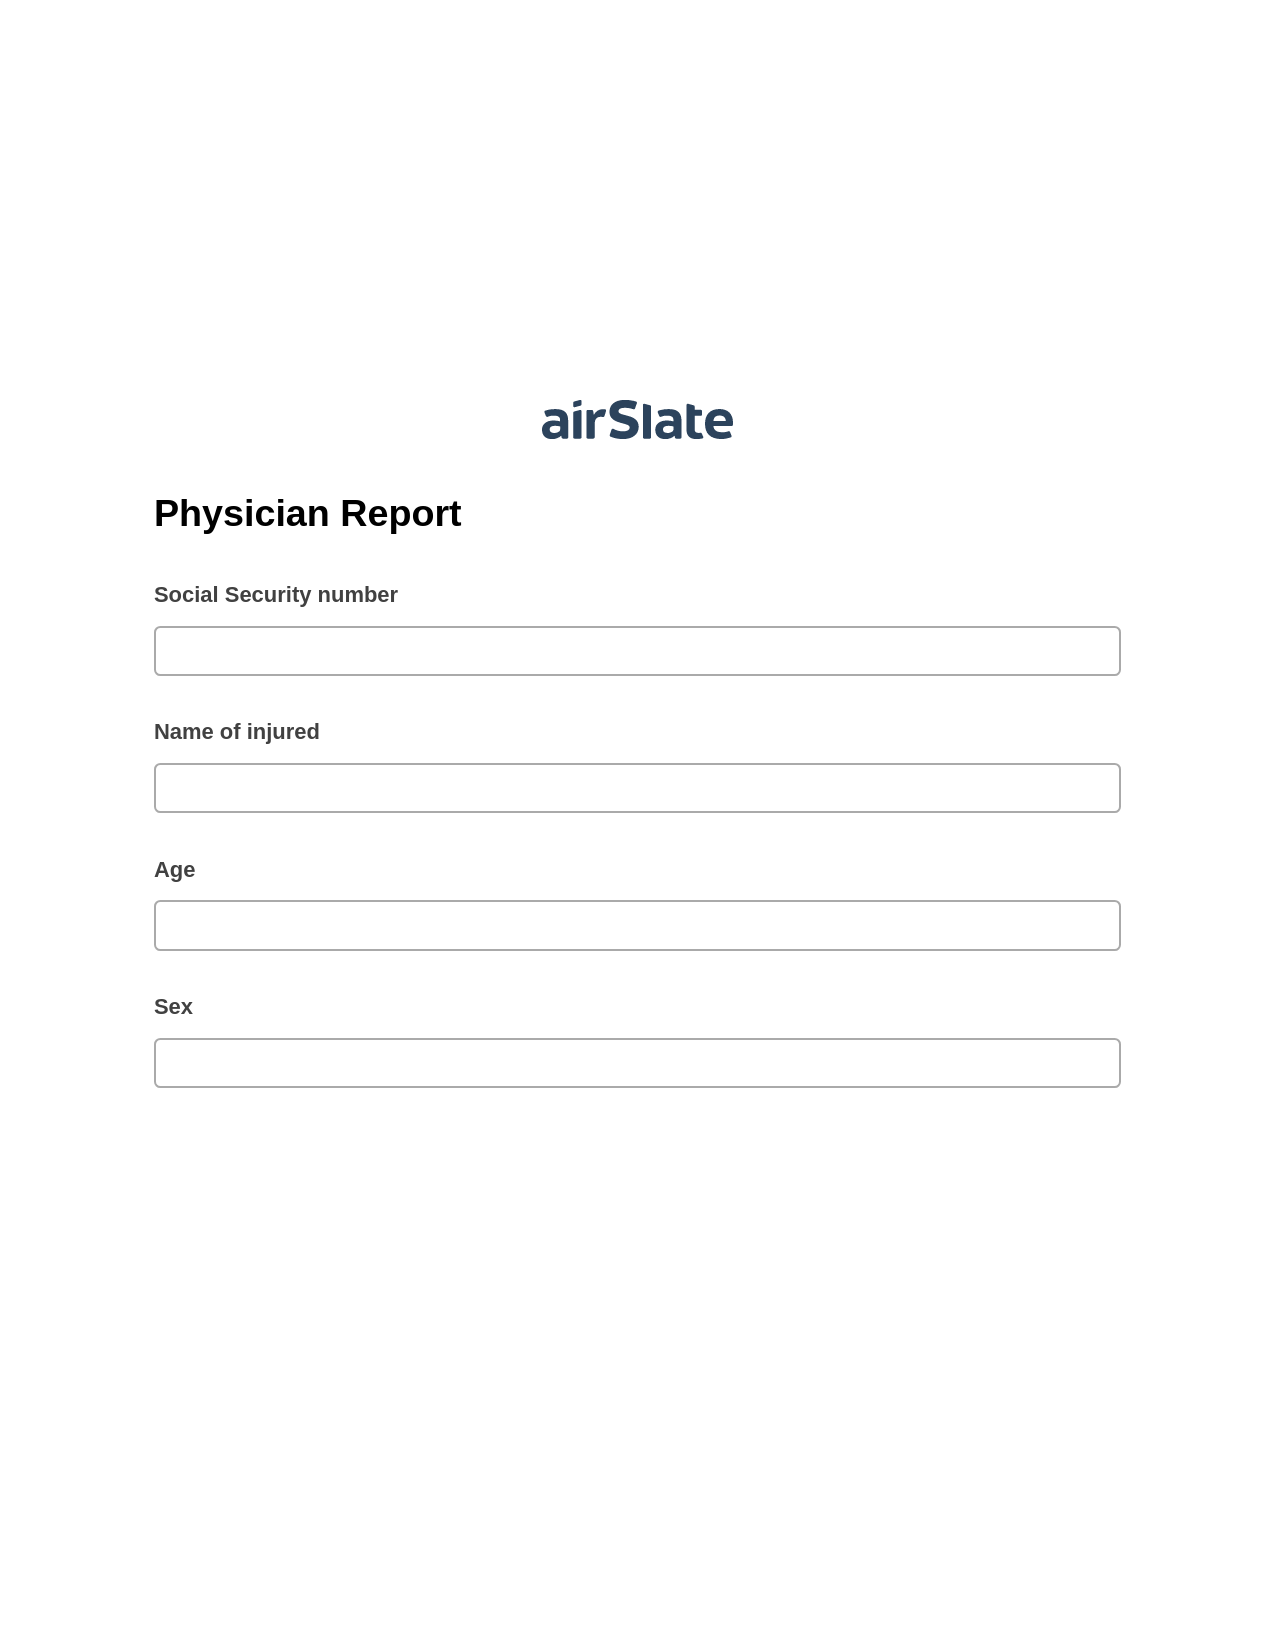 Physician Report Pre-fill Document Bot, Webhook Bot, Post-finish Document Bot